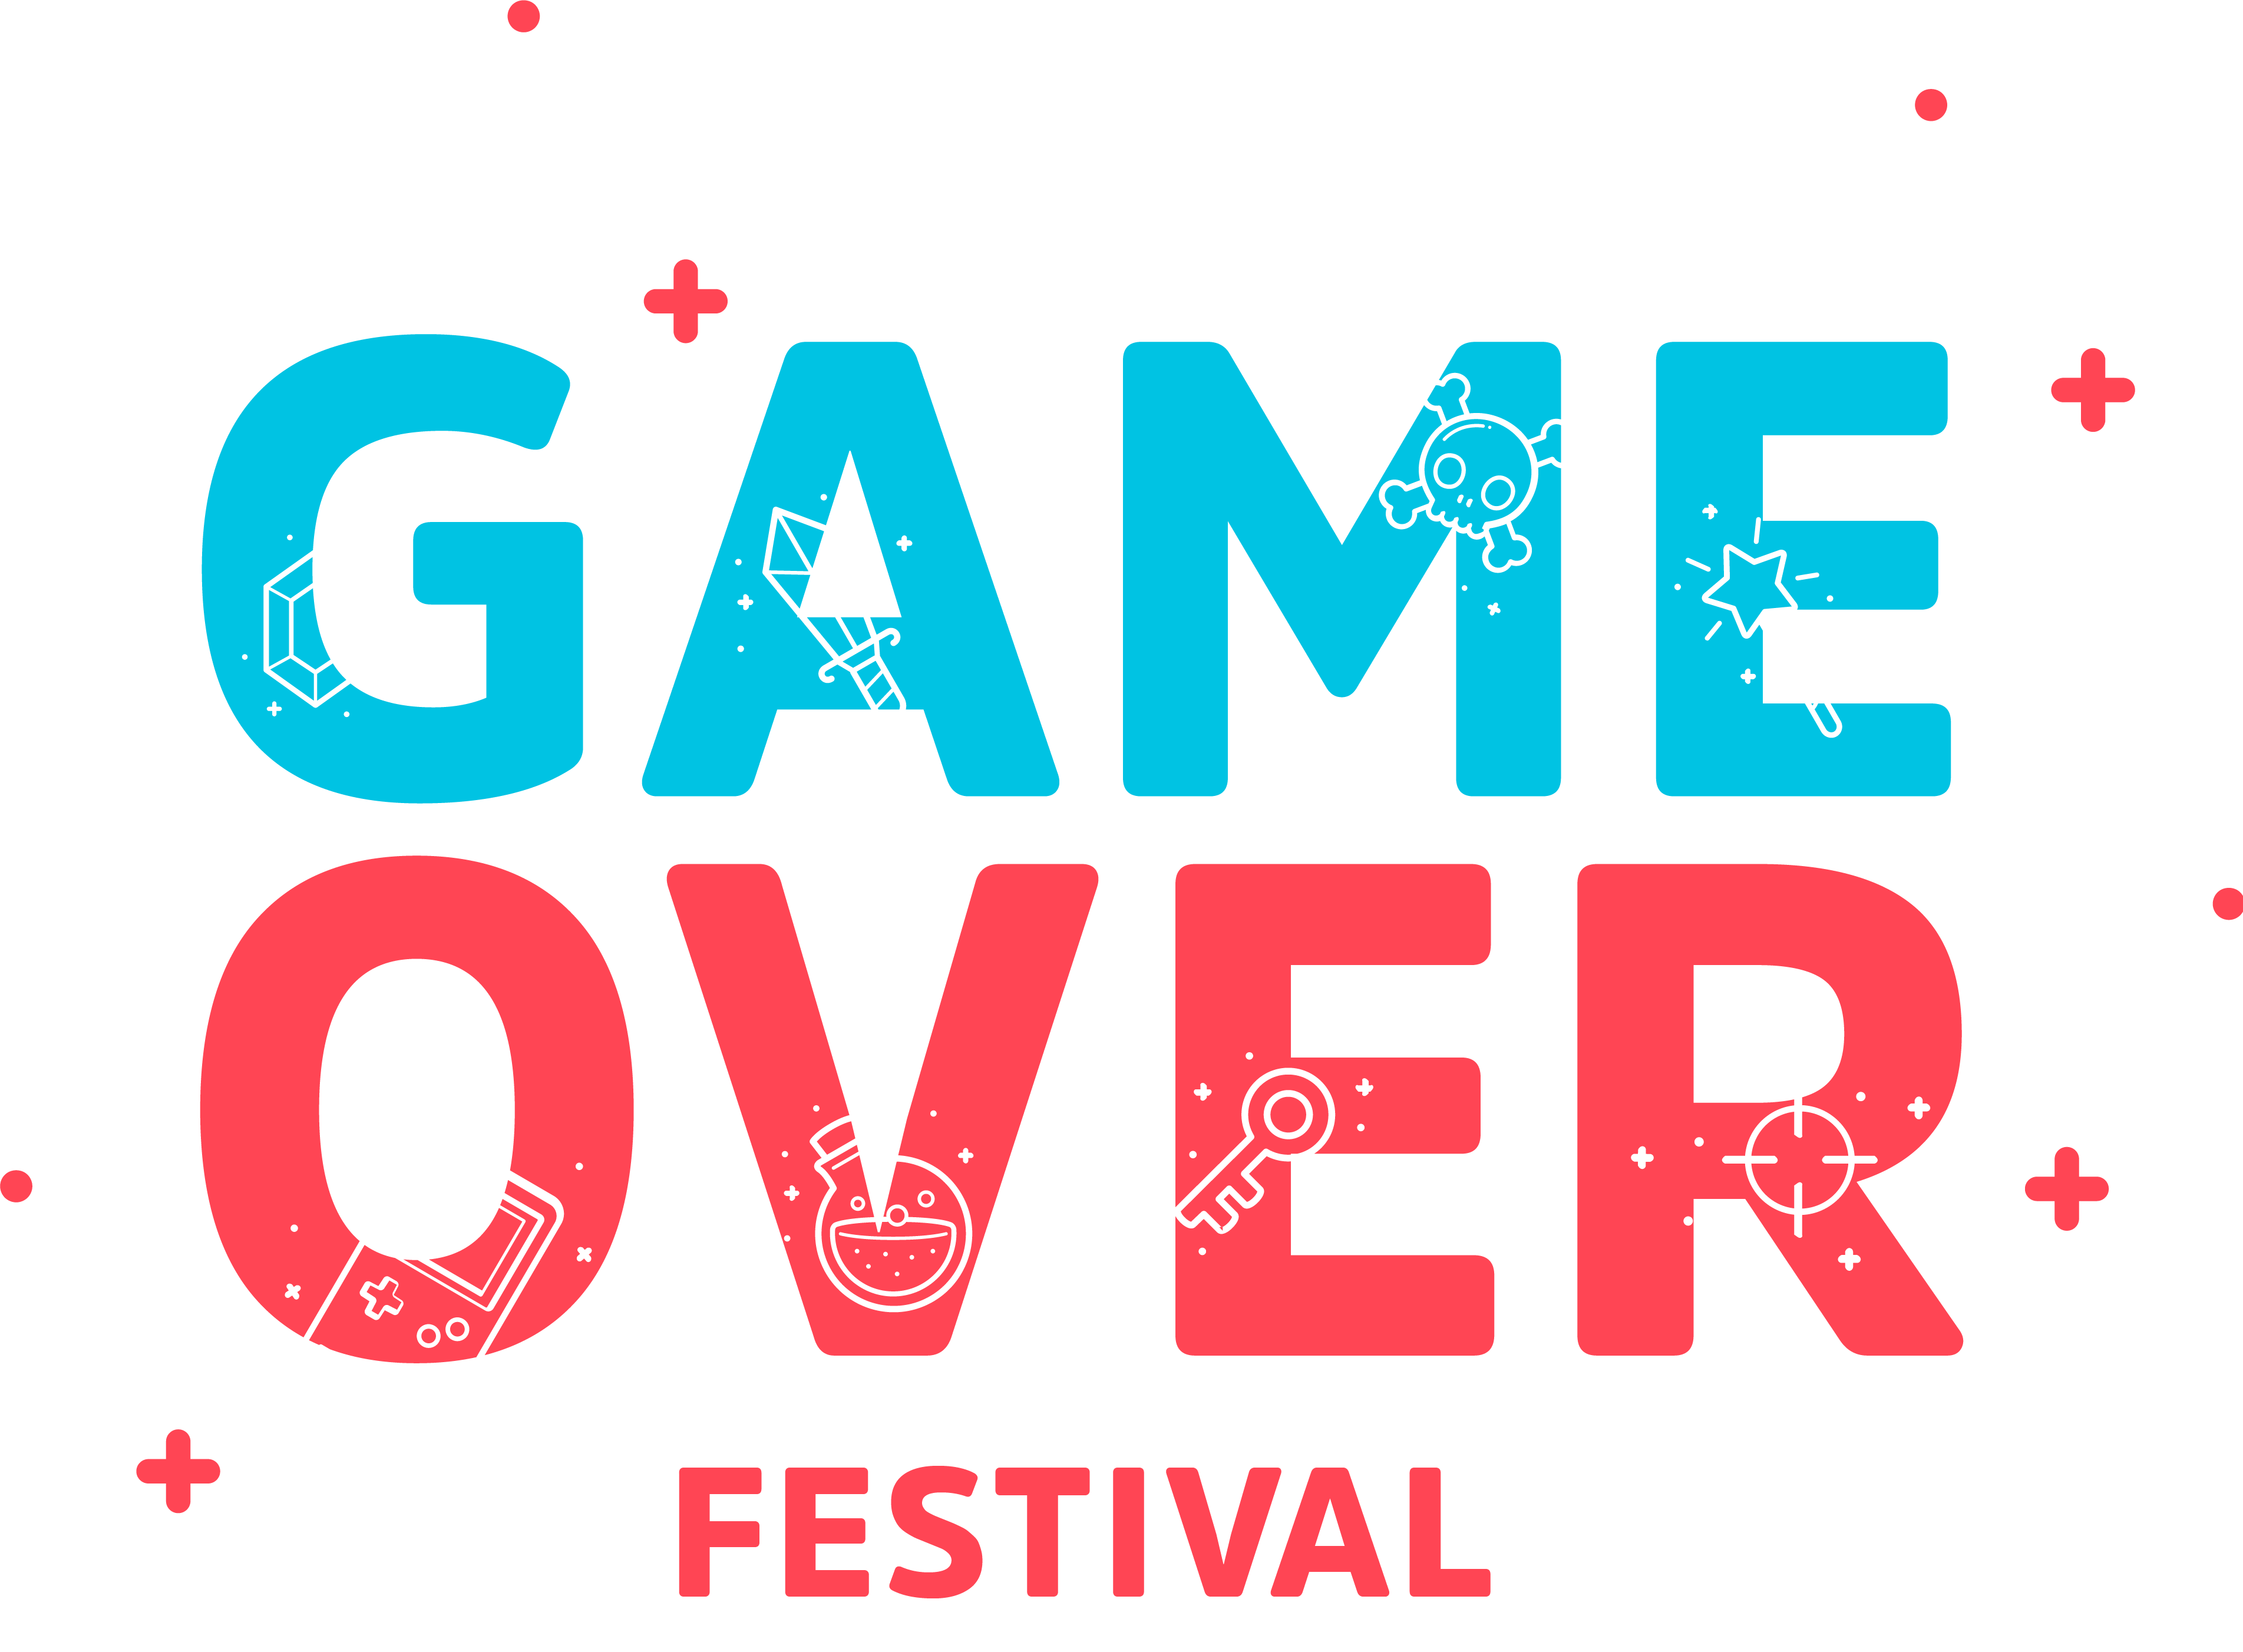 Game Over Festival